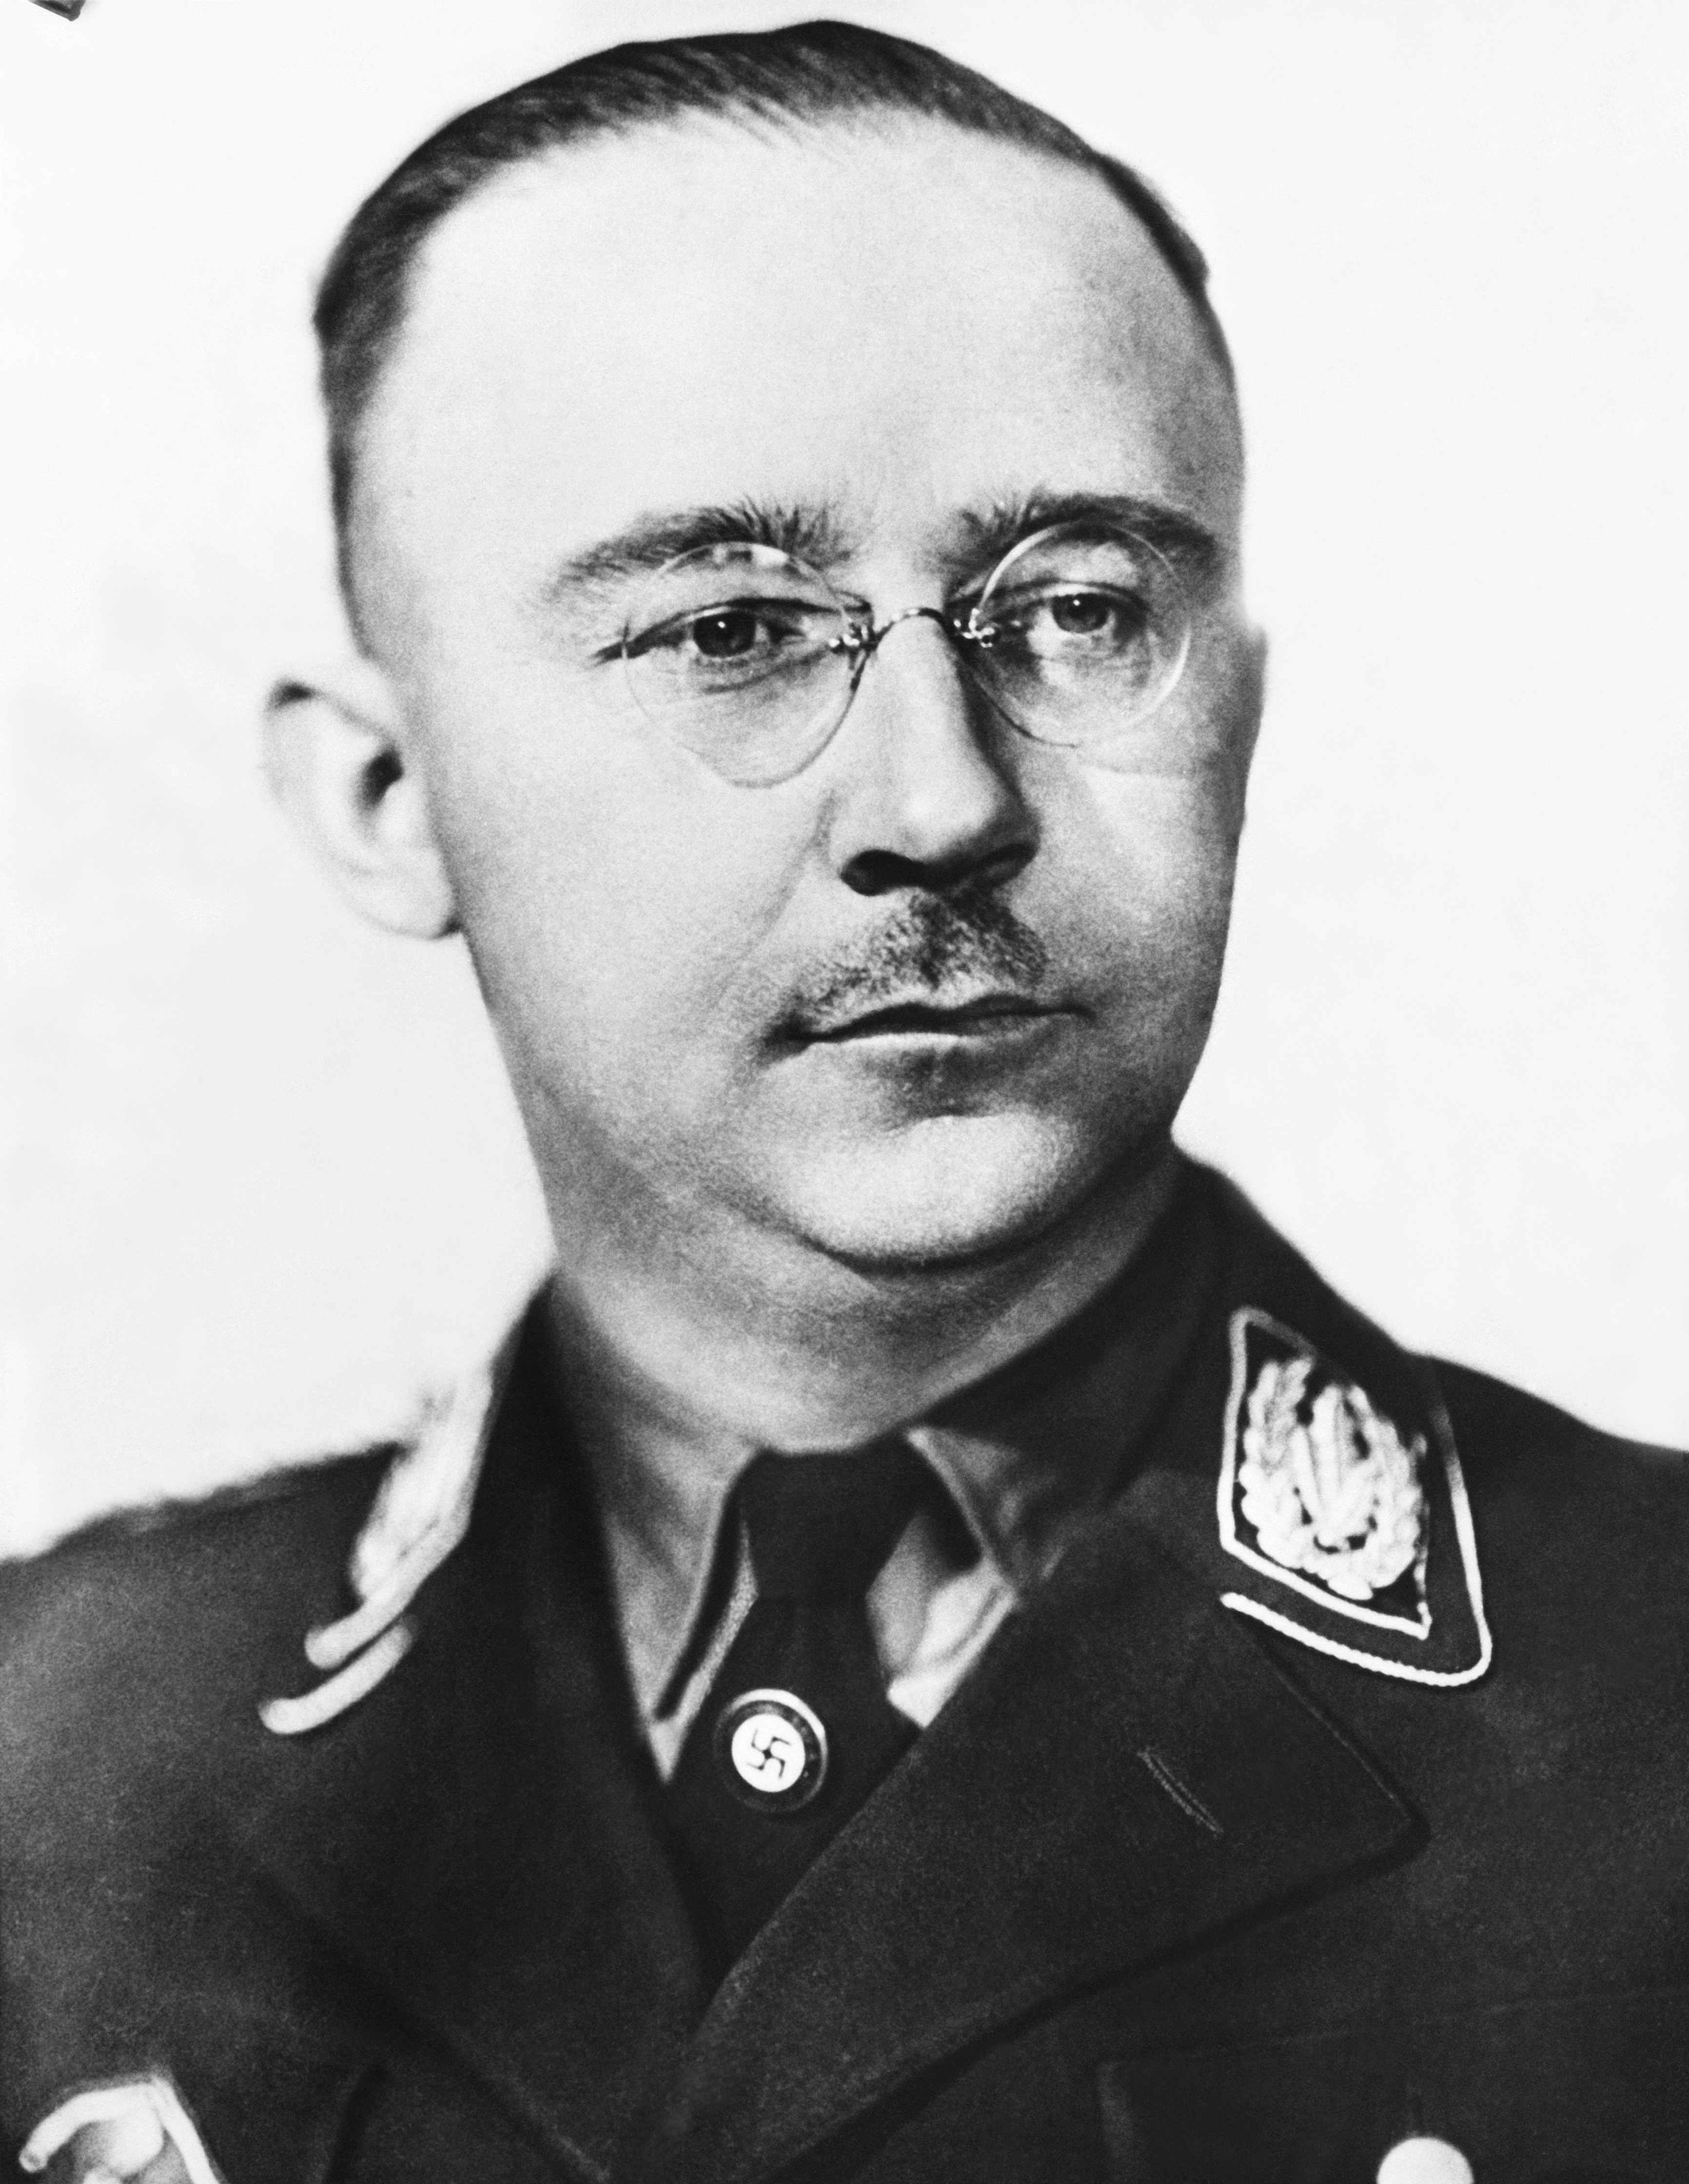 Henrich Himmler poses in Germany in 1945.